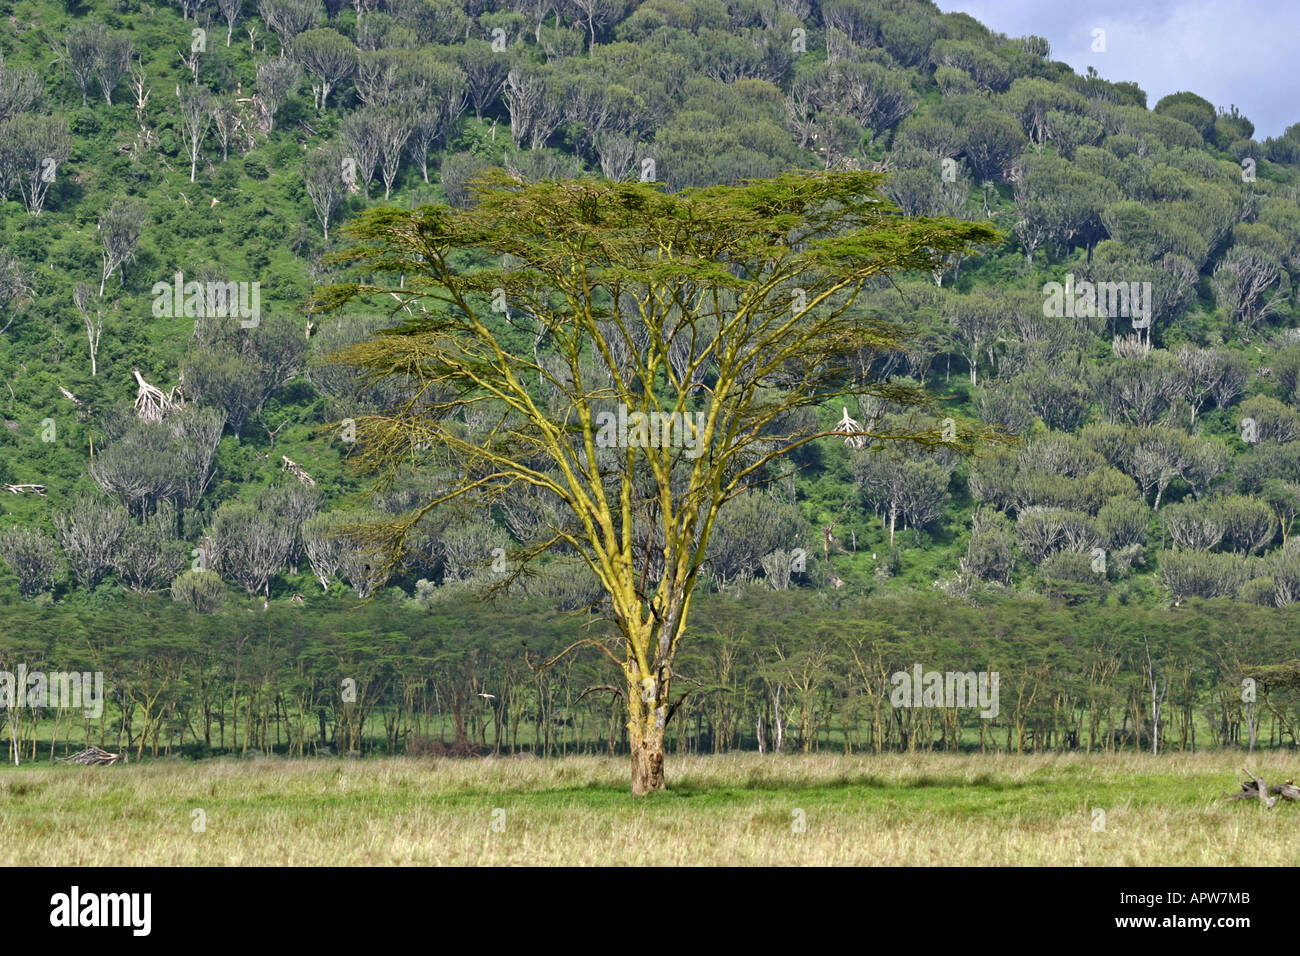 acacia (Acacia xanthophloea), single tree in front of candelabra-euphorbias, Kenya, Nakuru NP Stock Photo